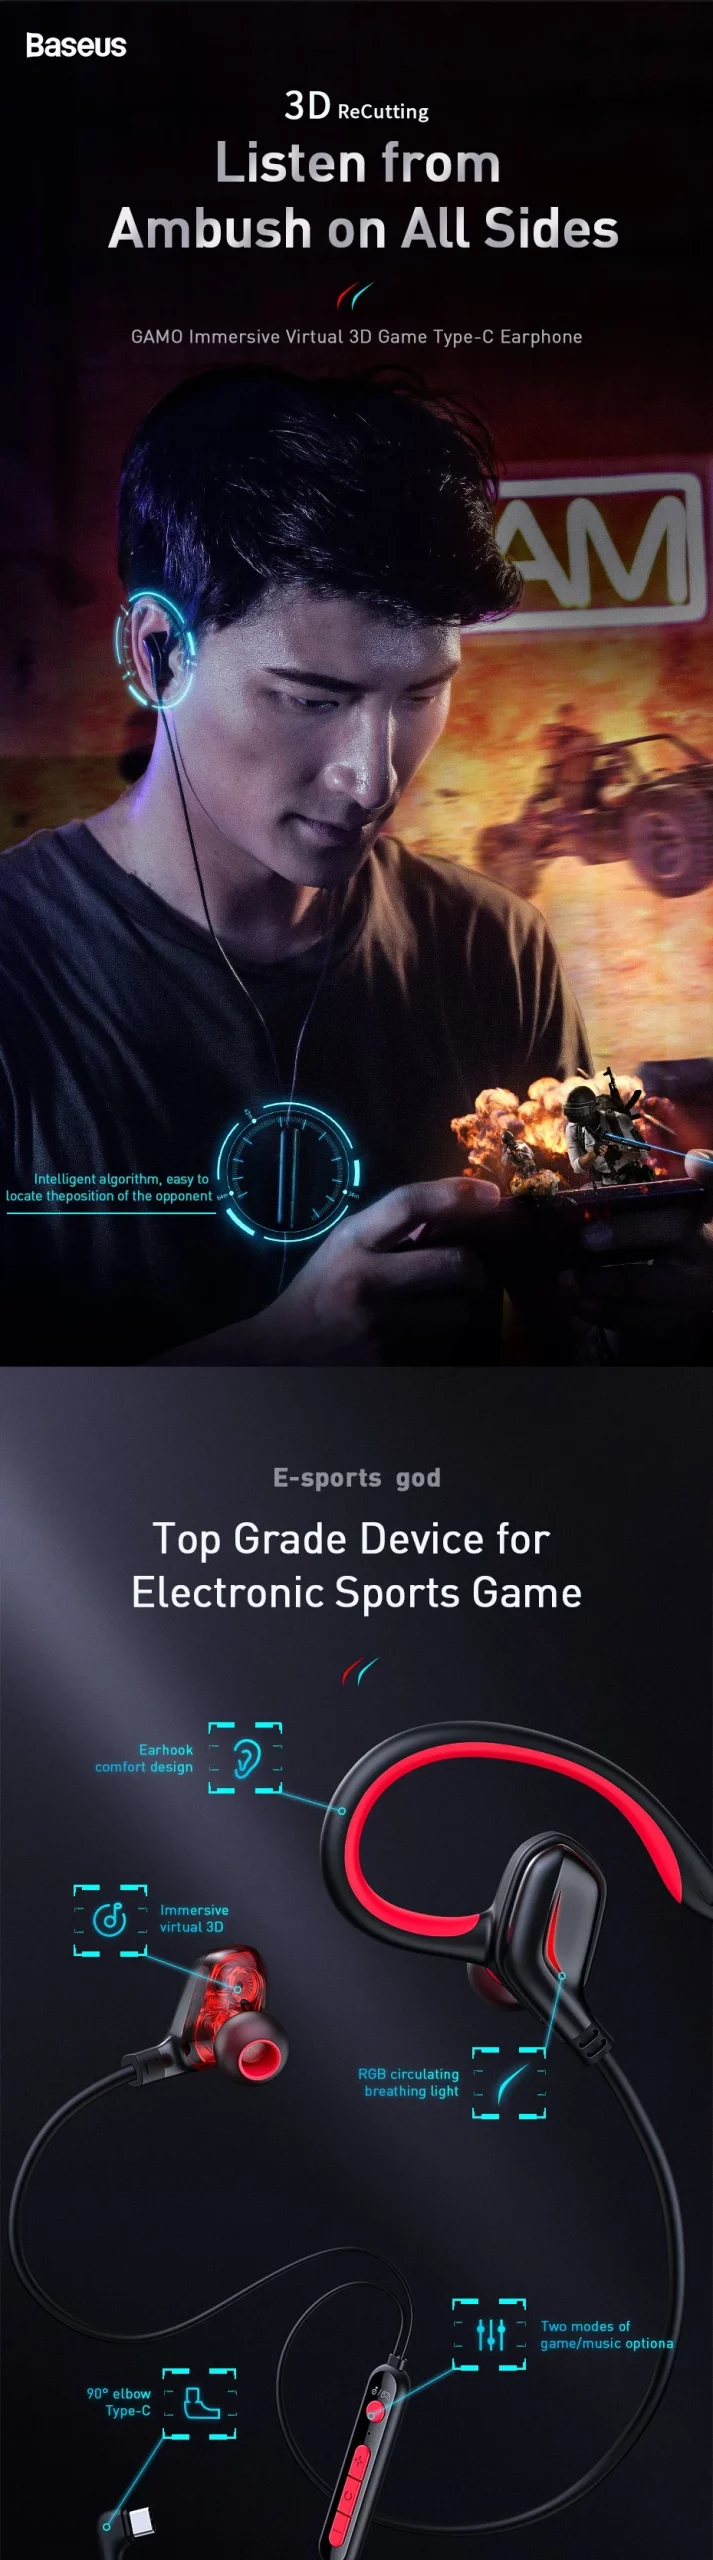 Baseus GAMO Immersive Virtual 3D Game Type C Earphone